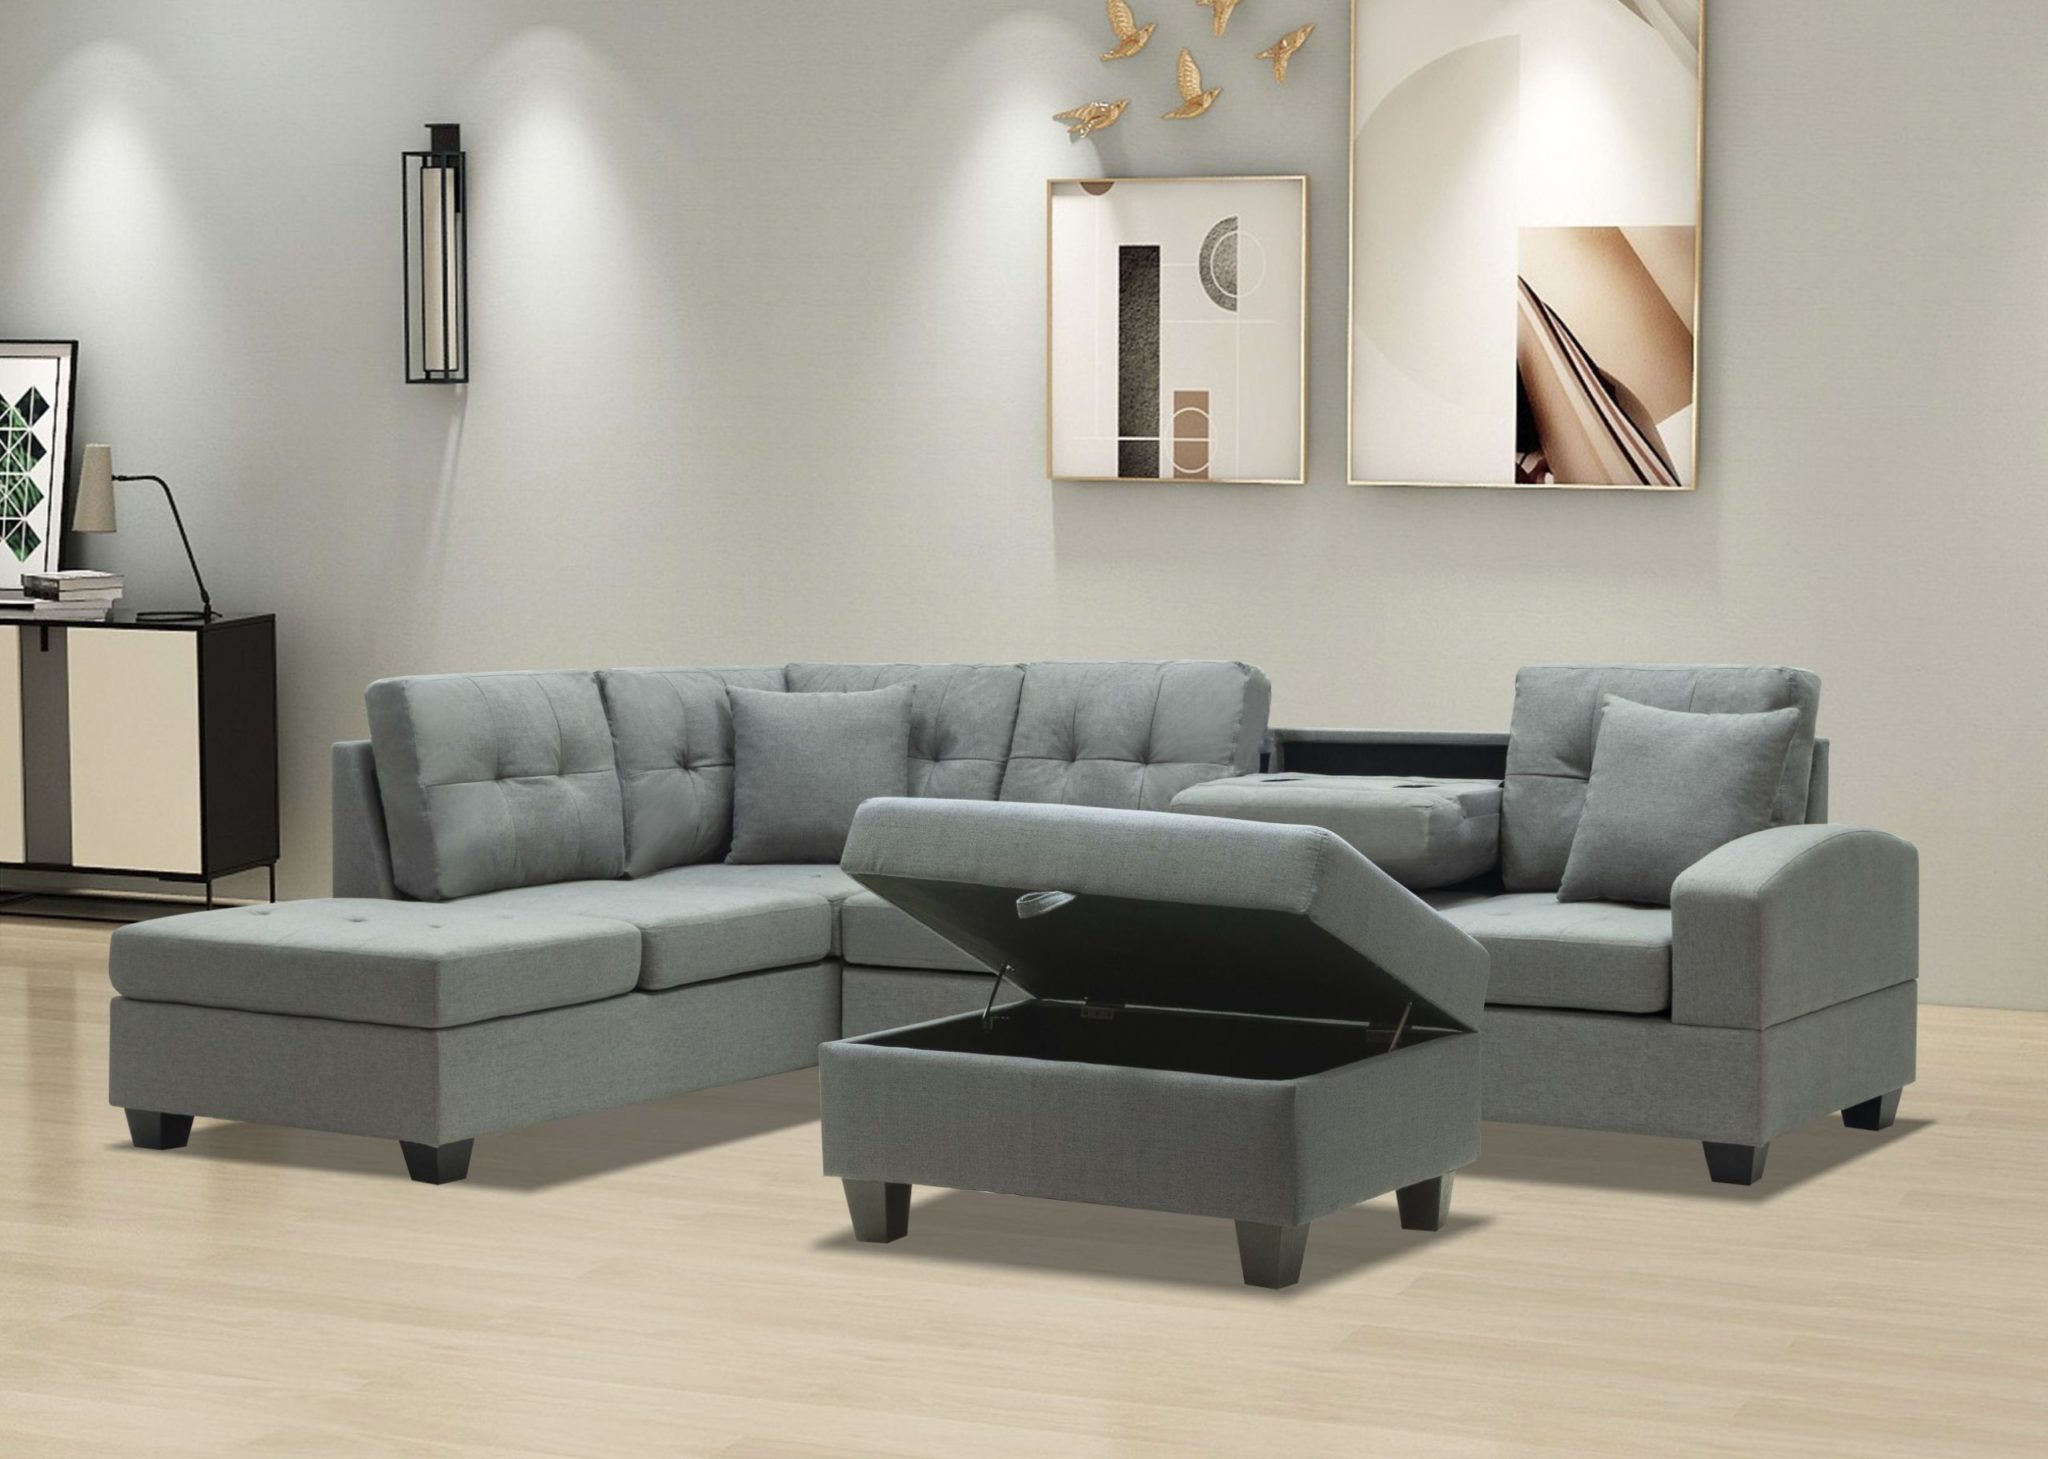 HS2300 Husky Furniture Emma Reverseable Sectional Sofa With Storage Ottman Gray LHF Scaled 2048x1459 